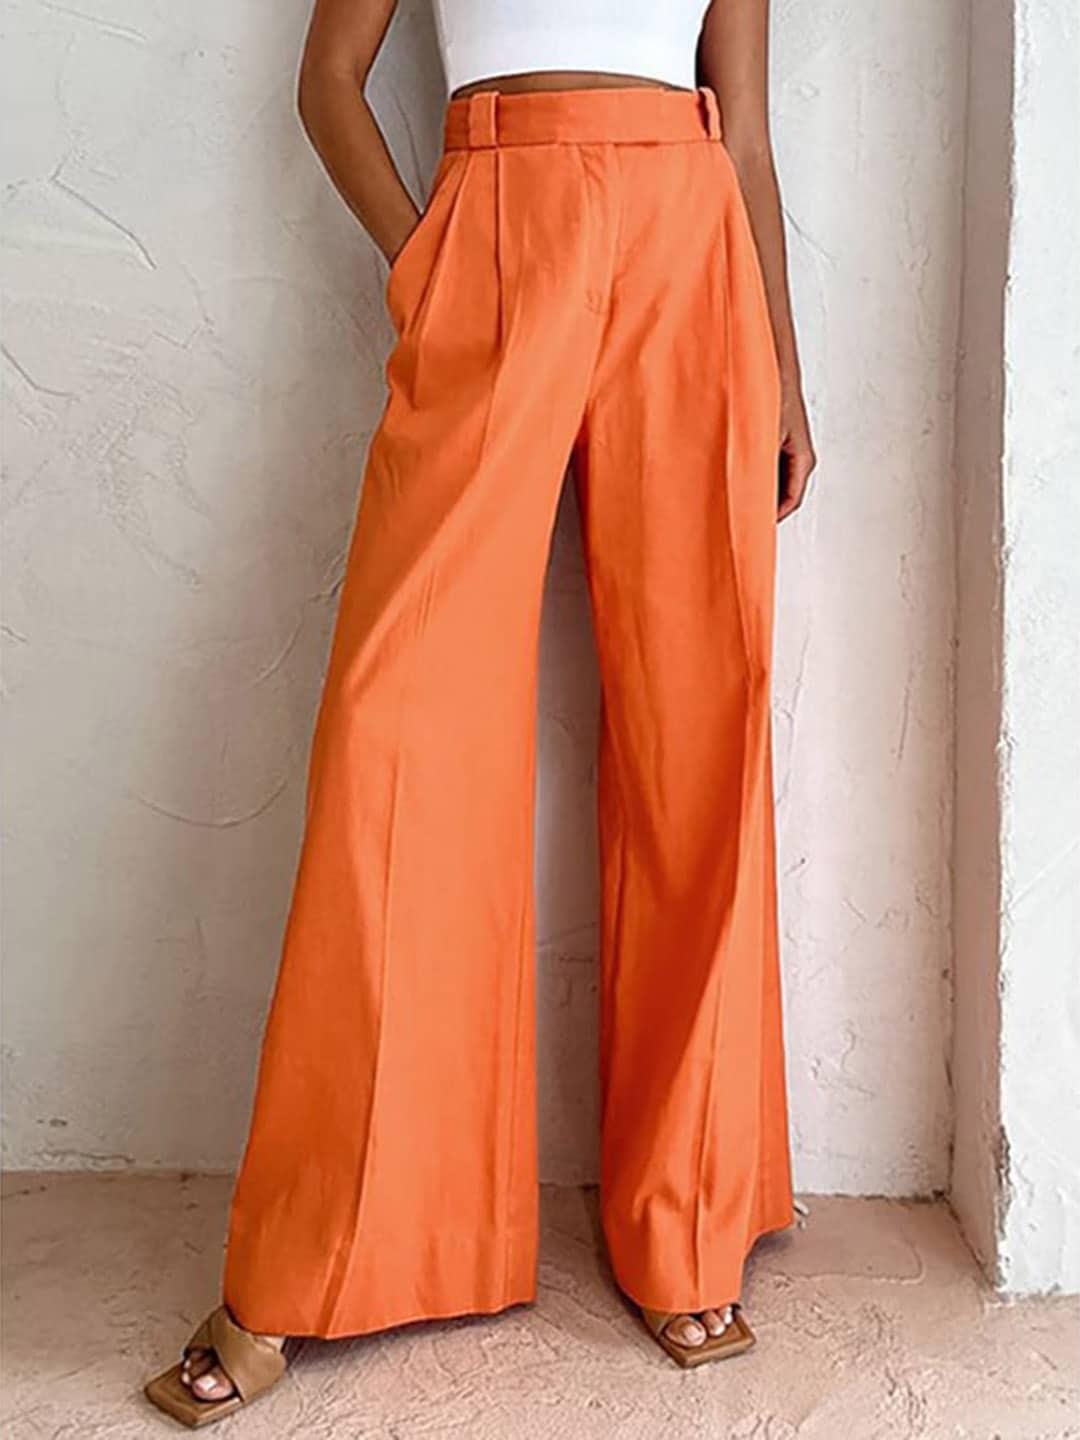 stylecast women orange flared trousers